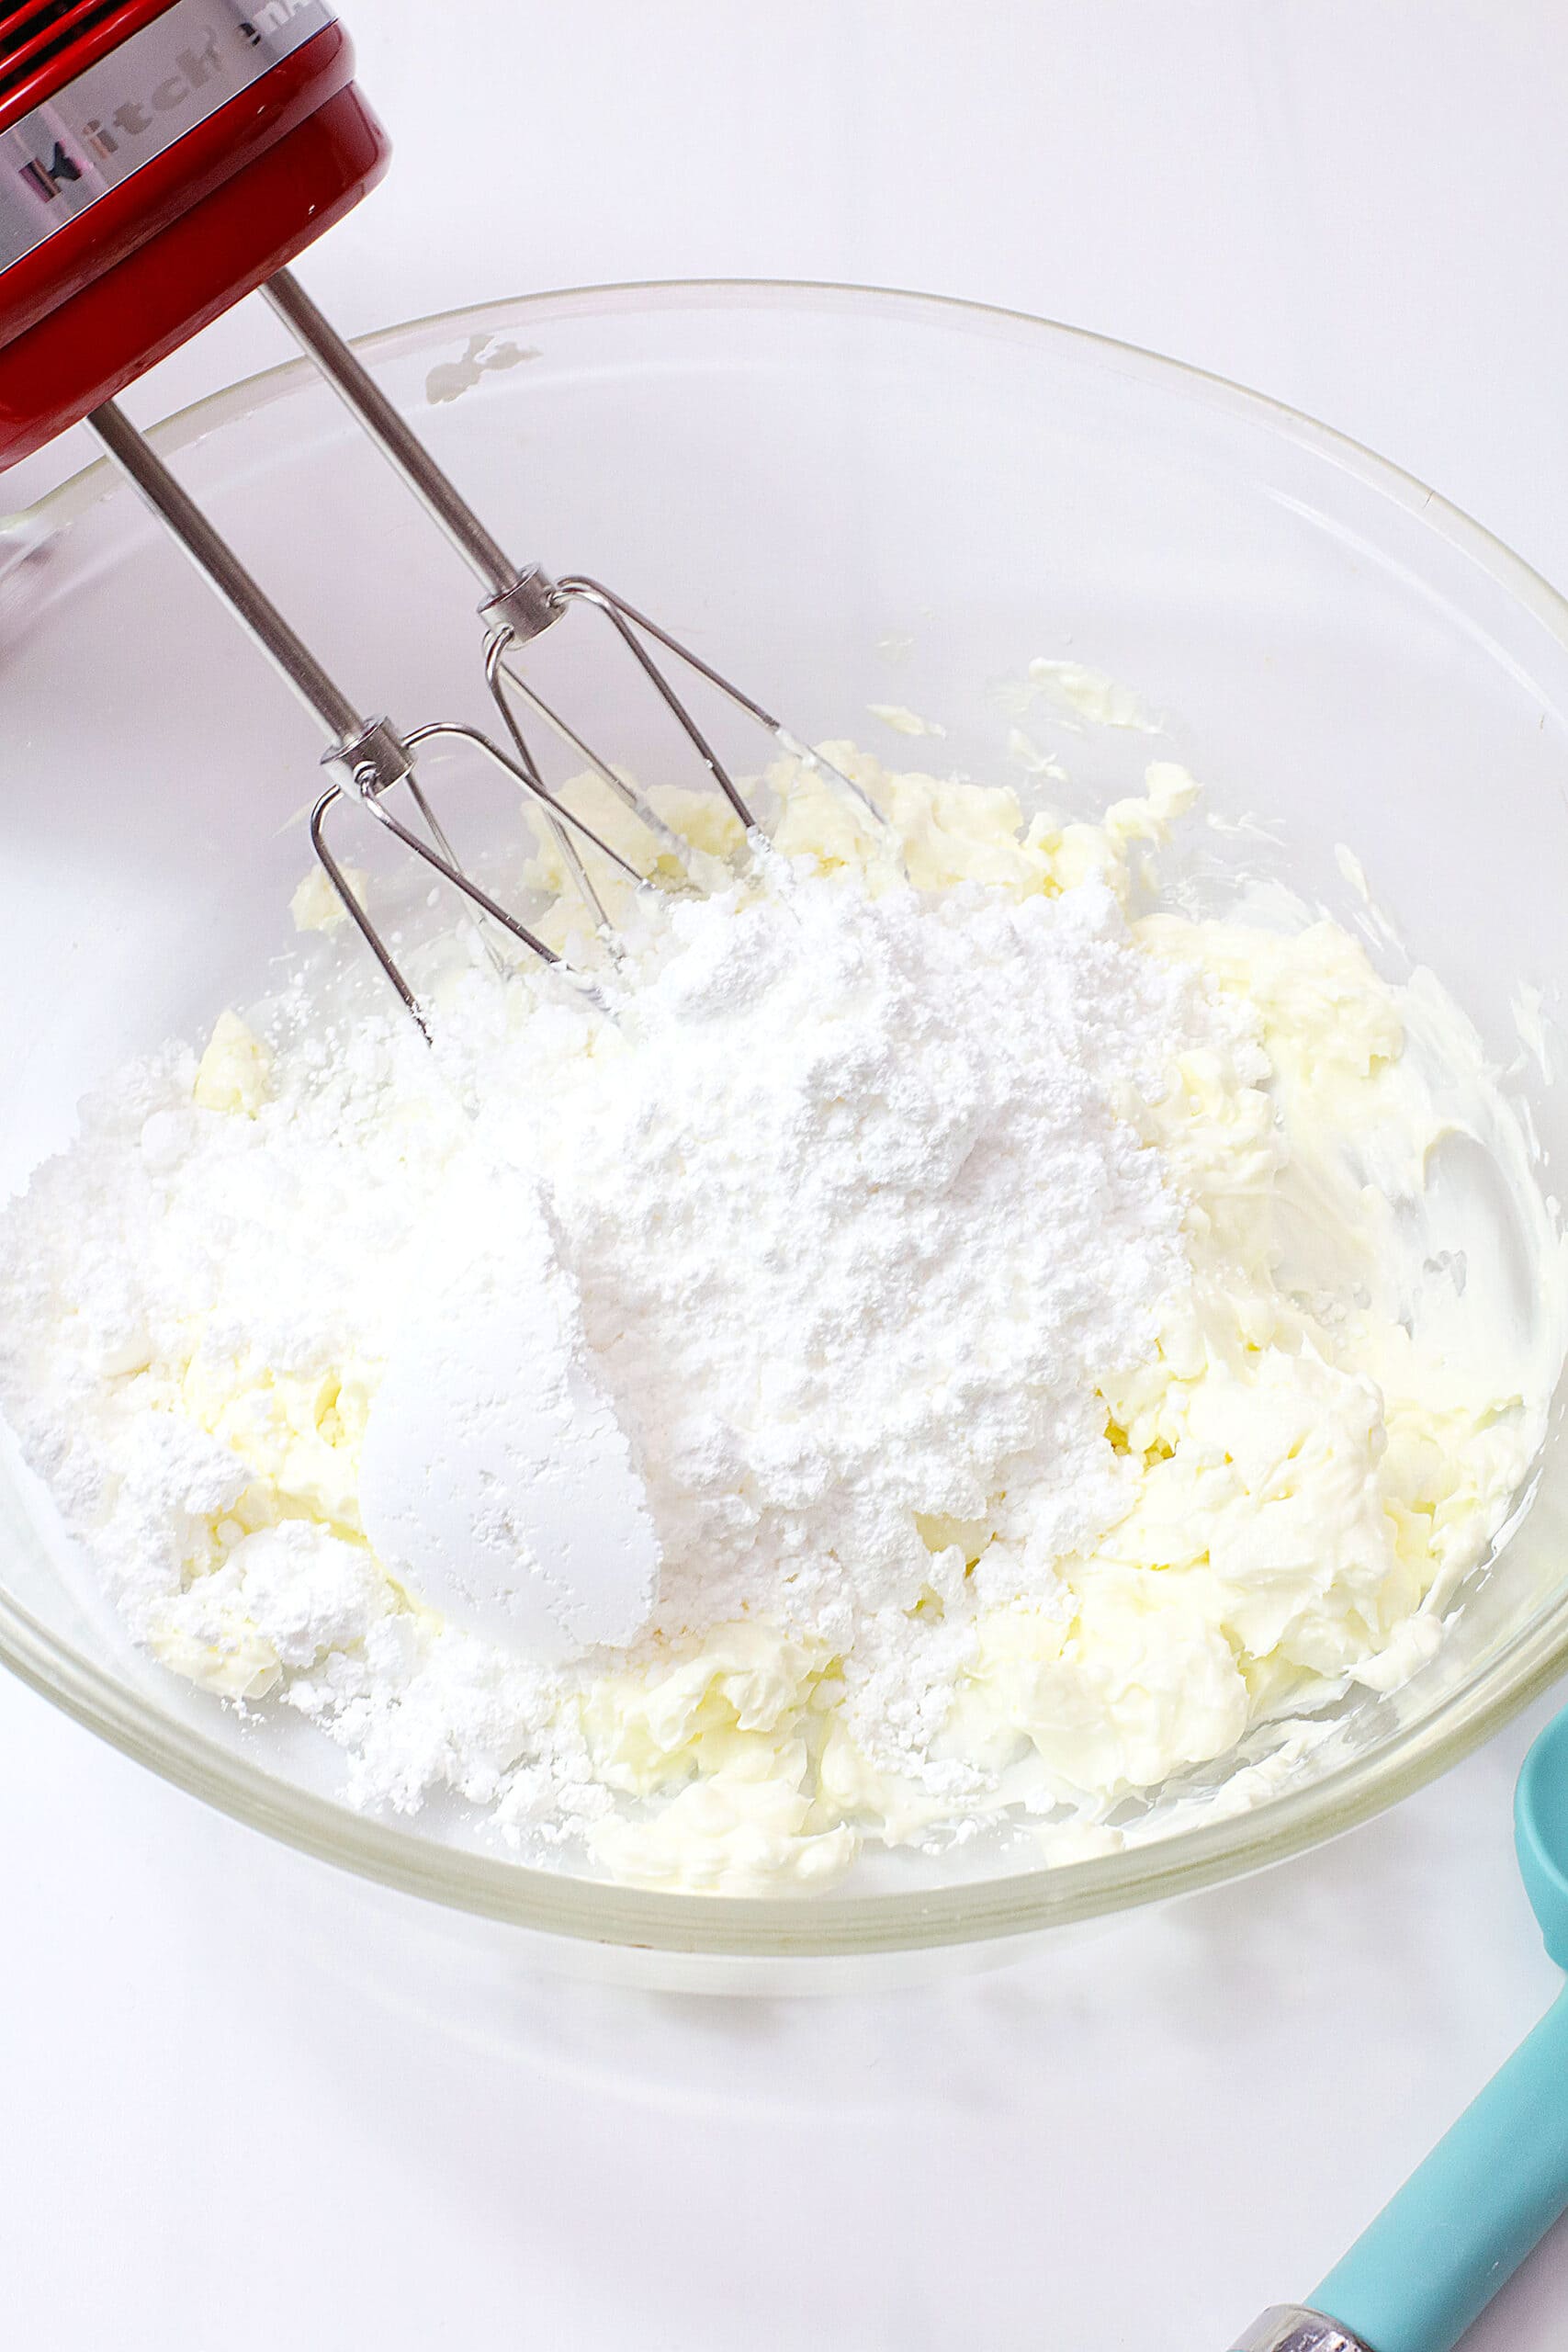 mix the Cream Cheese and Powdered Sugar